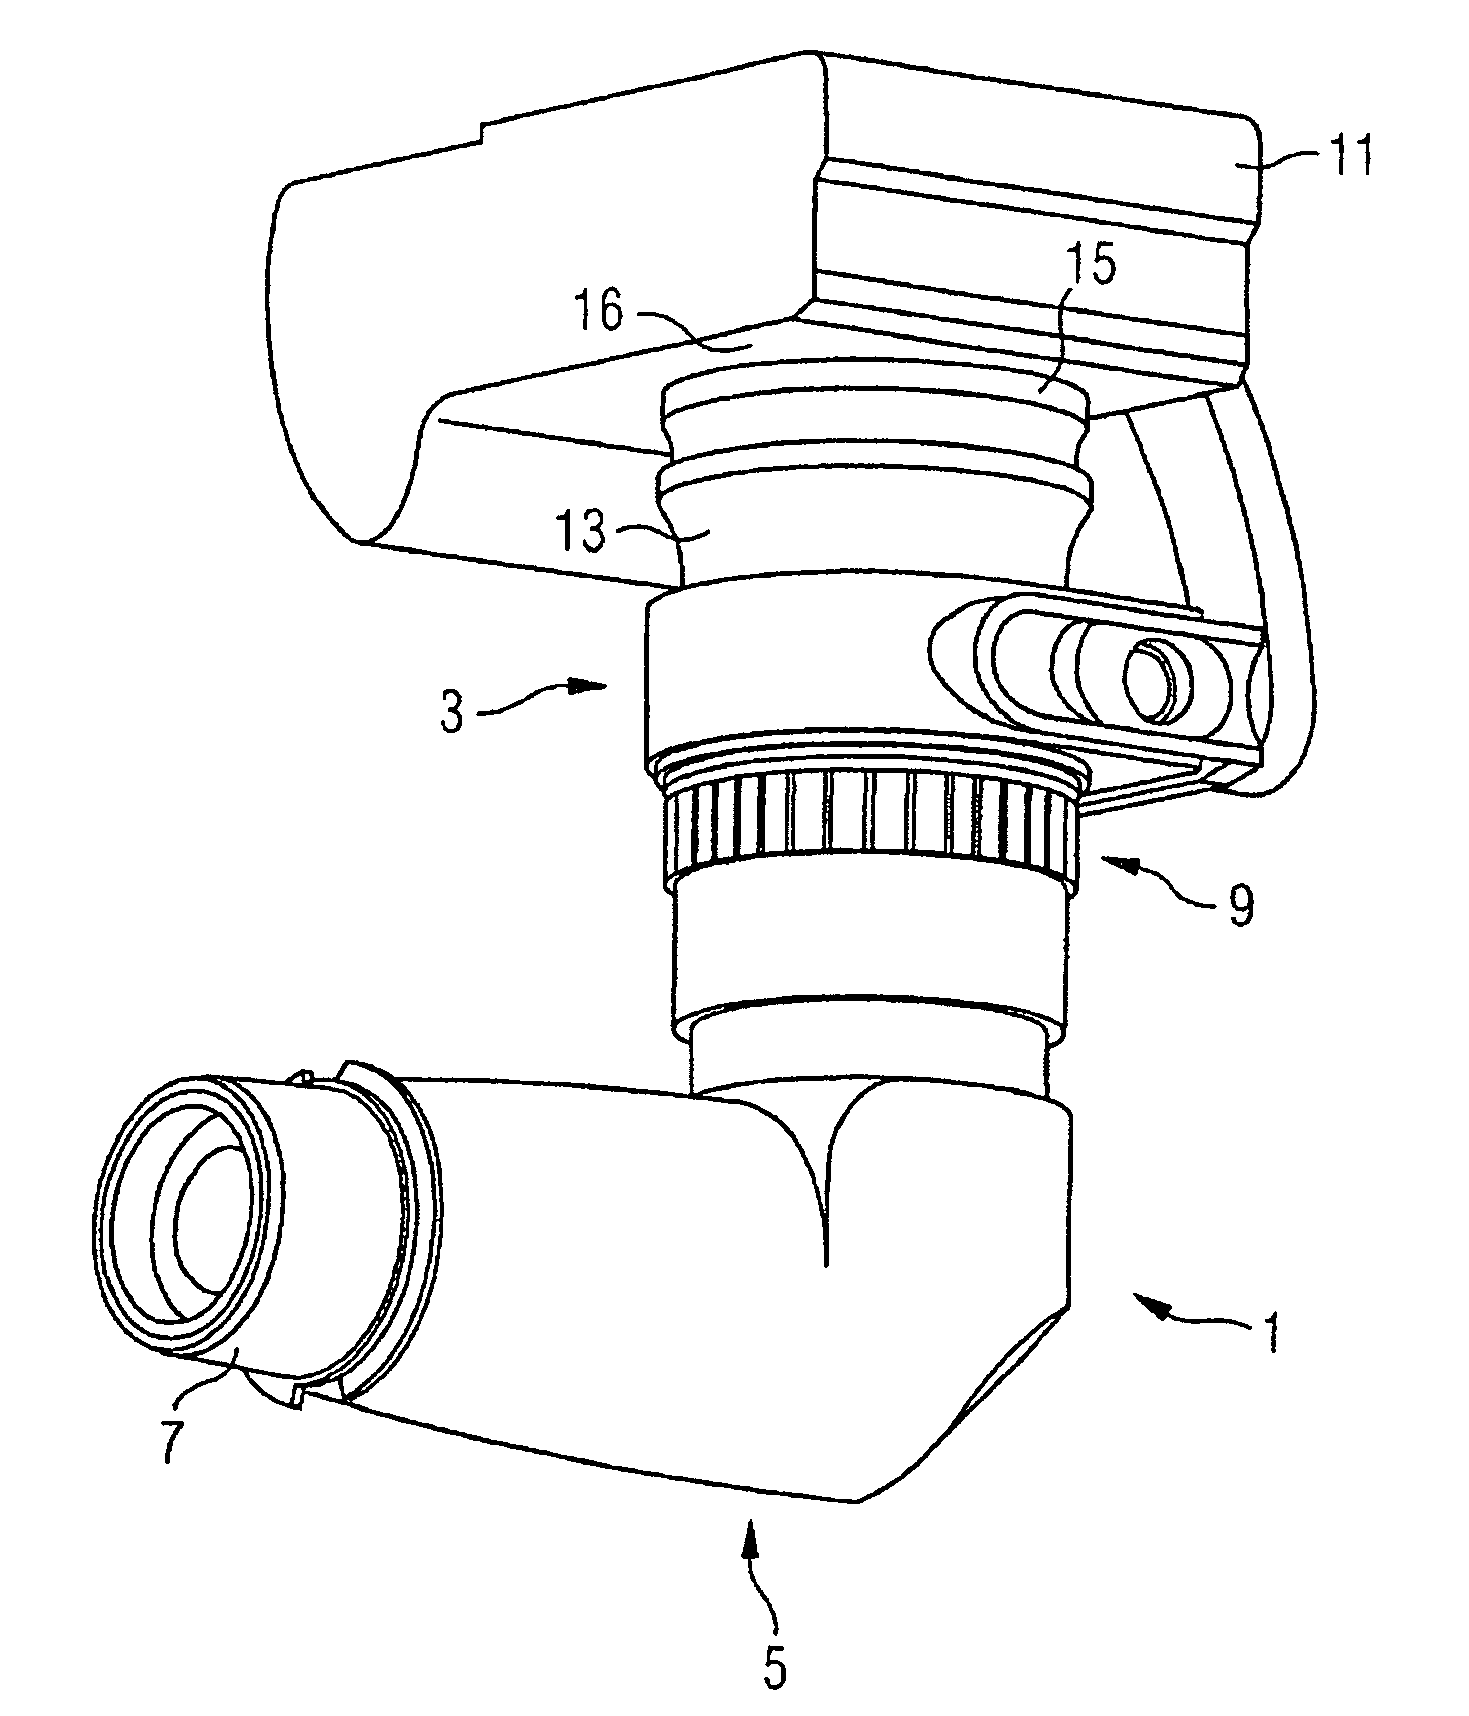 Camera adapter having a camera holder and an optical adapter